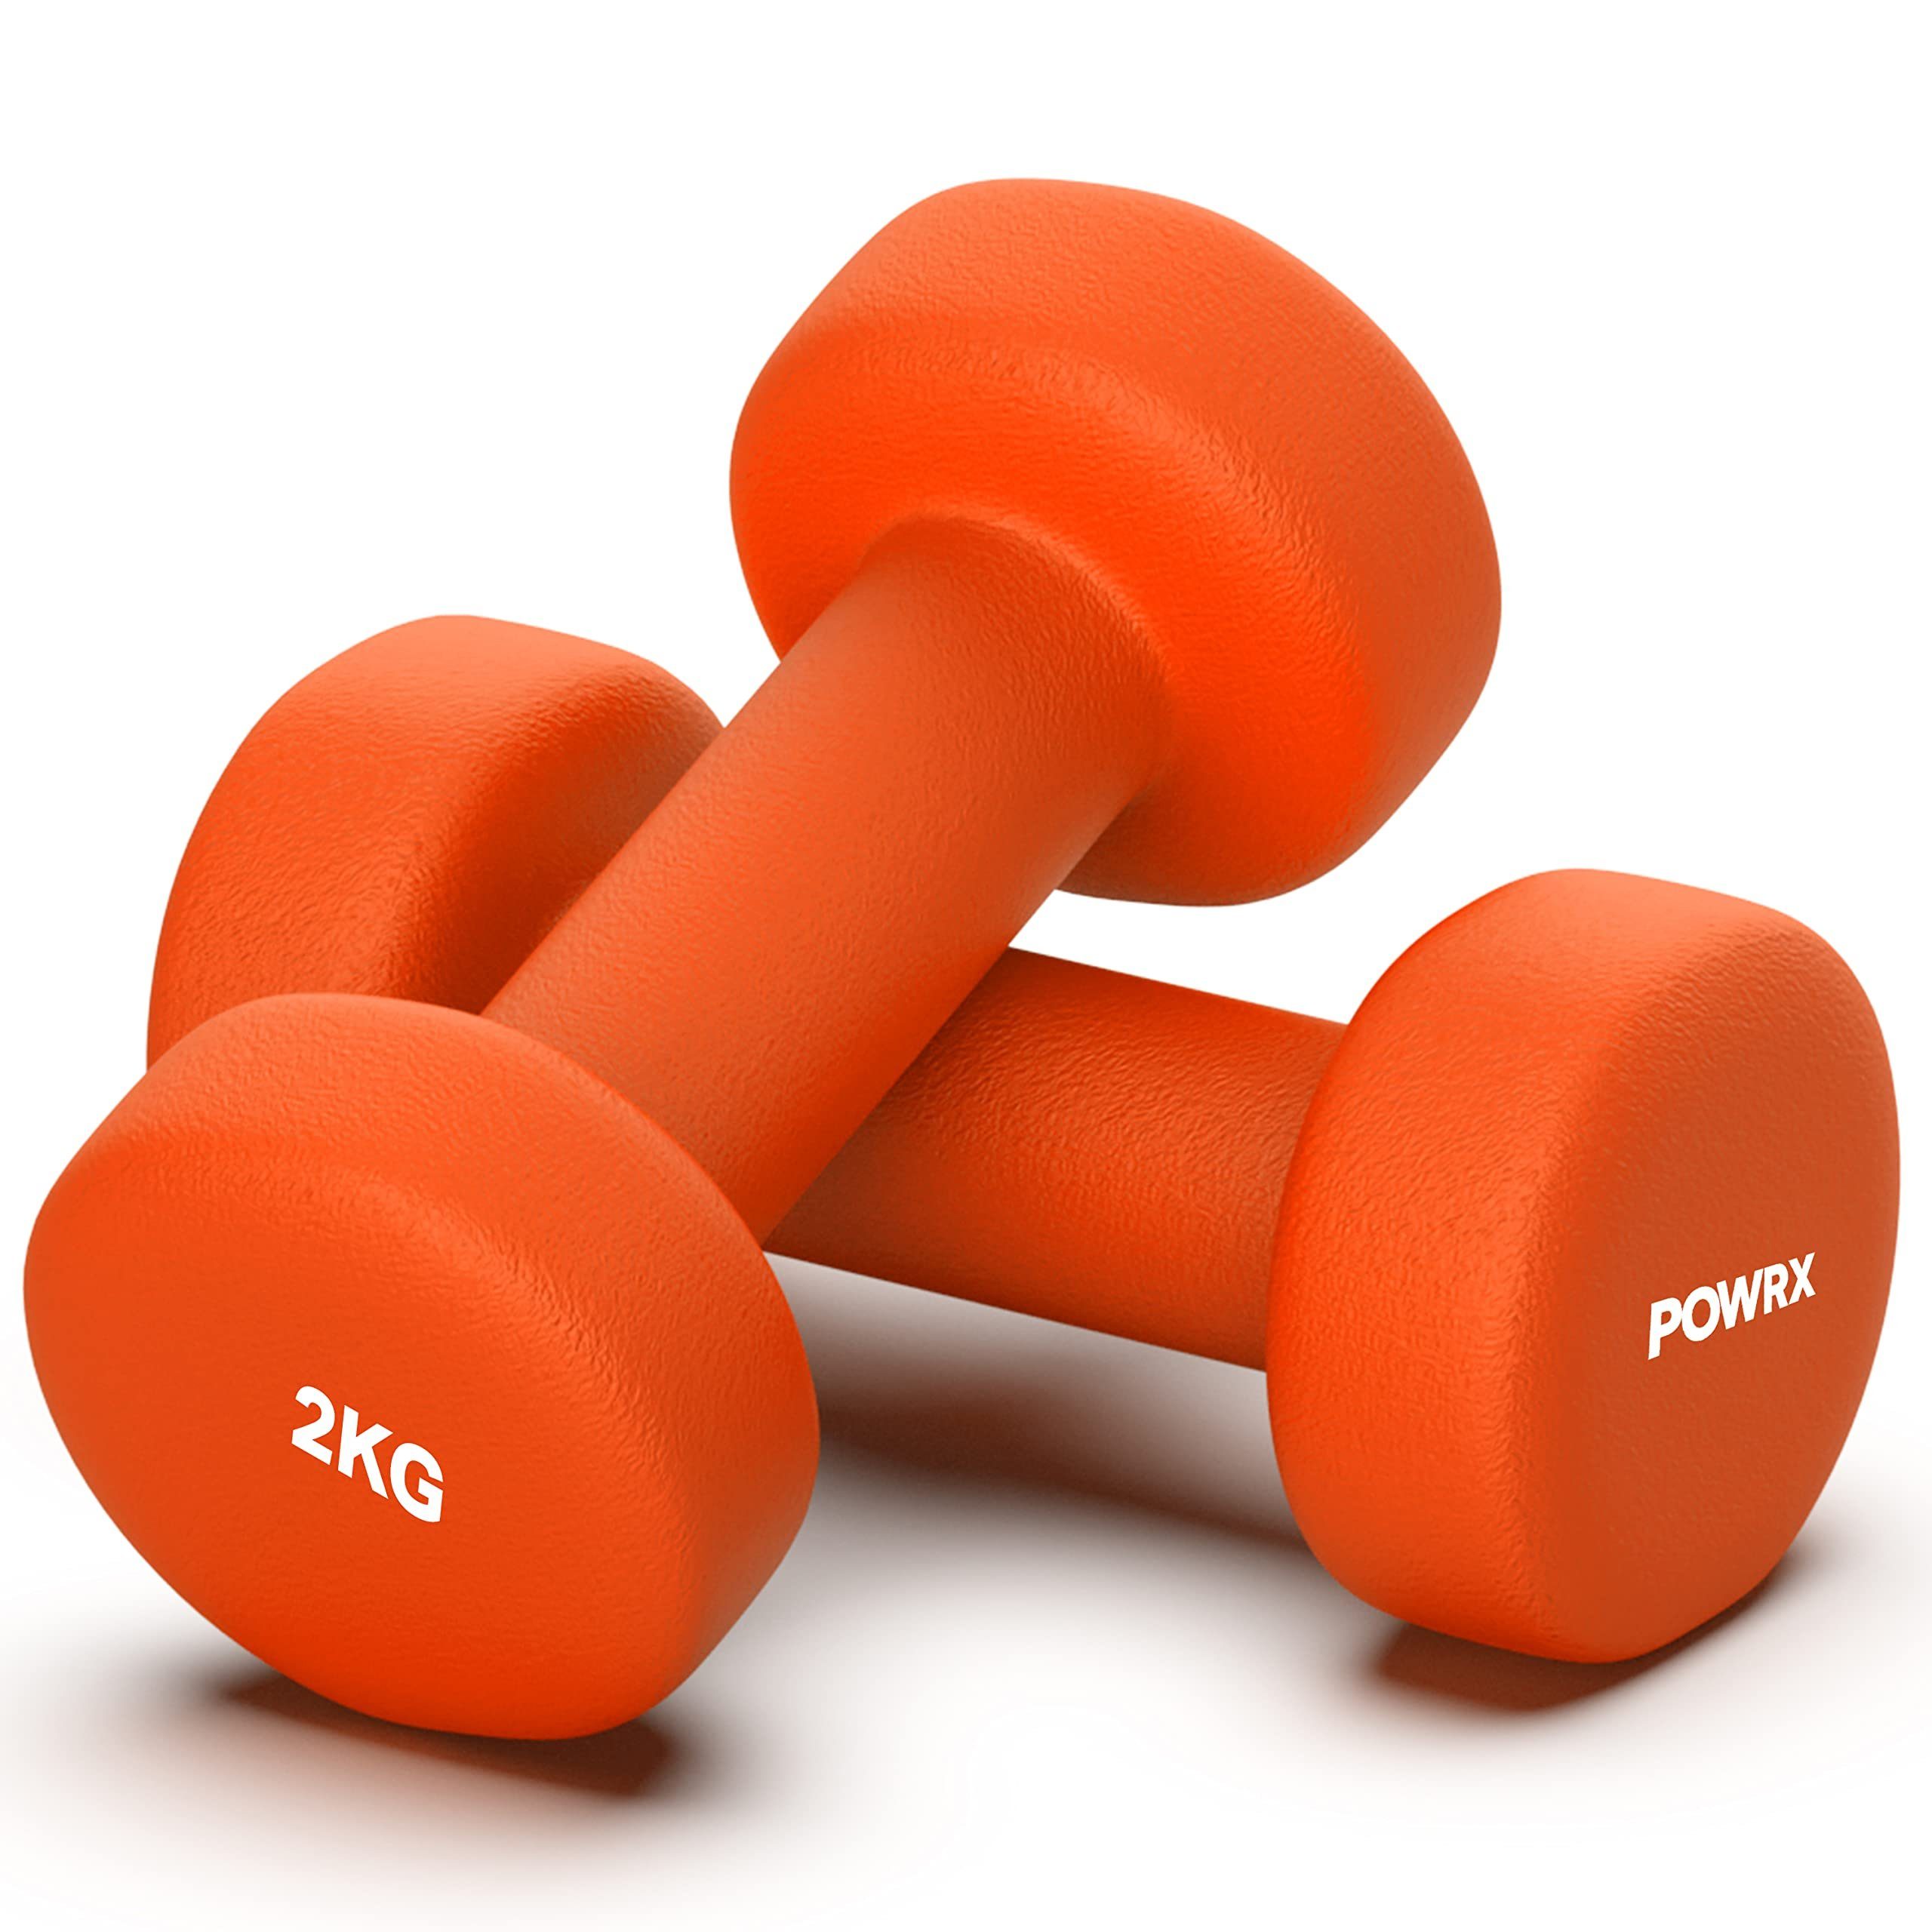 Kg X Krafttraining, Männer/Frauen Fitness, Set, Kurzhantel Orange 2 kg) 2 Kurzhanteln ( Orange (2x2kg) Hexagon 2kg POWRX Neopren 2x2